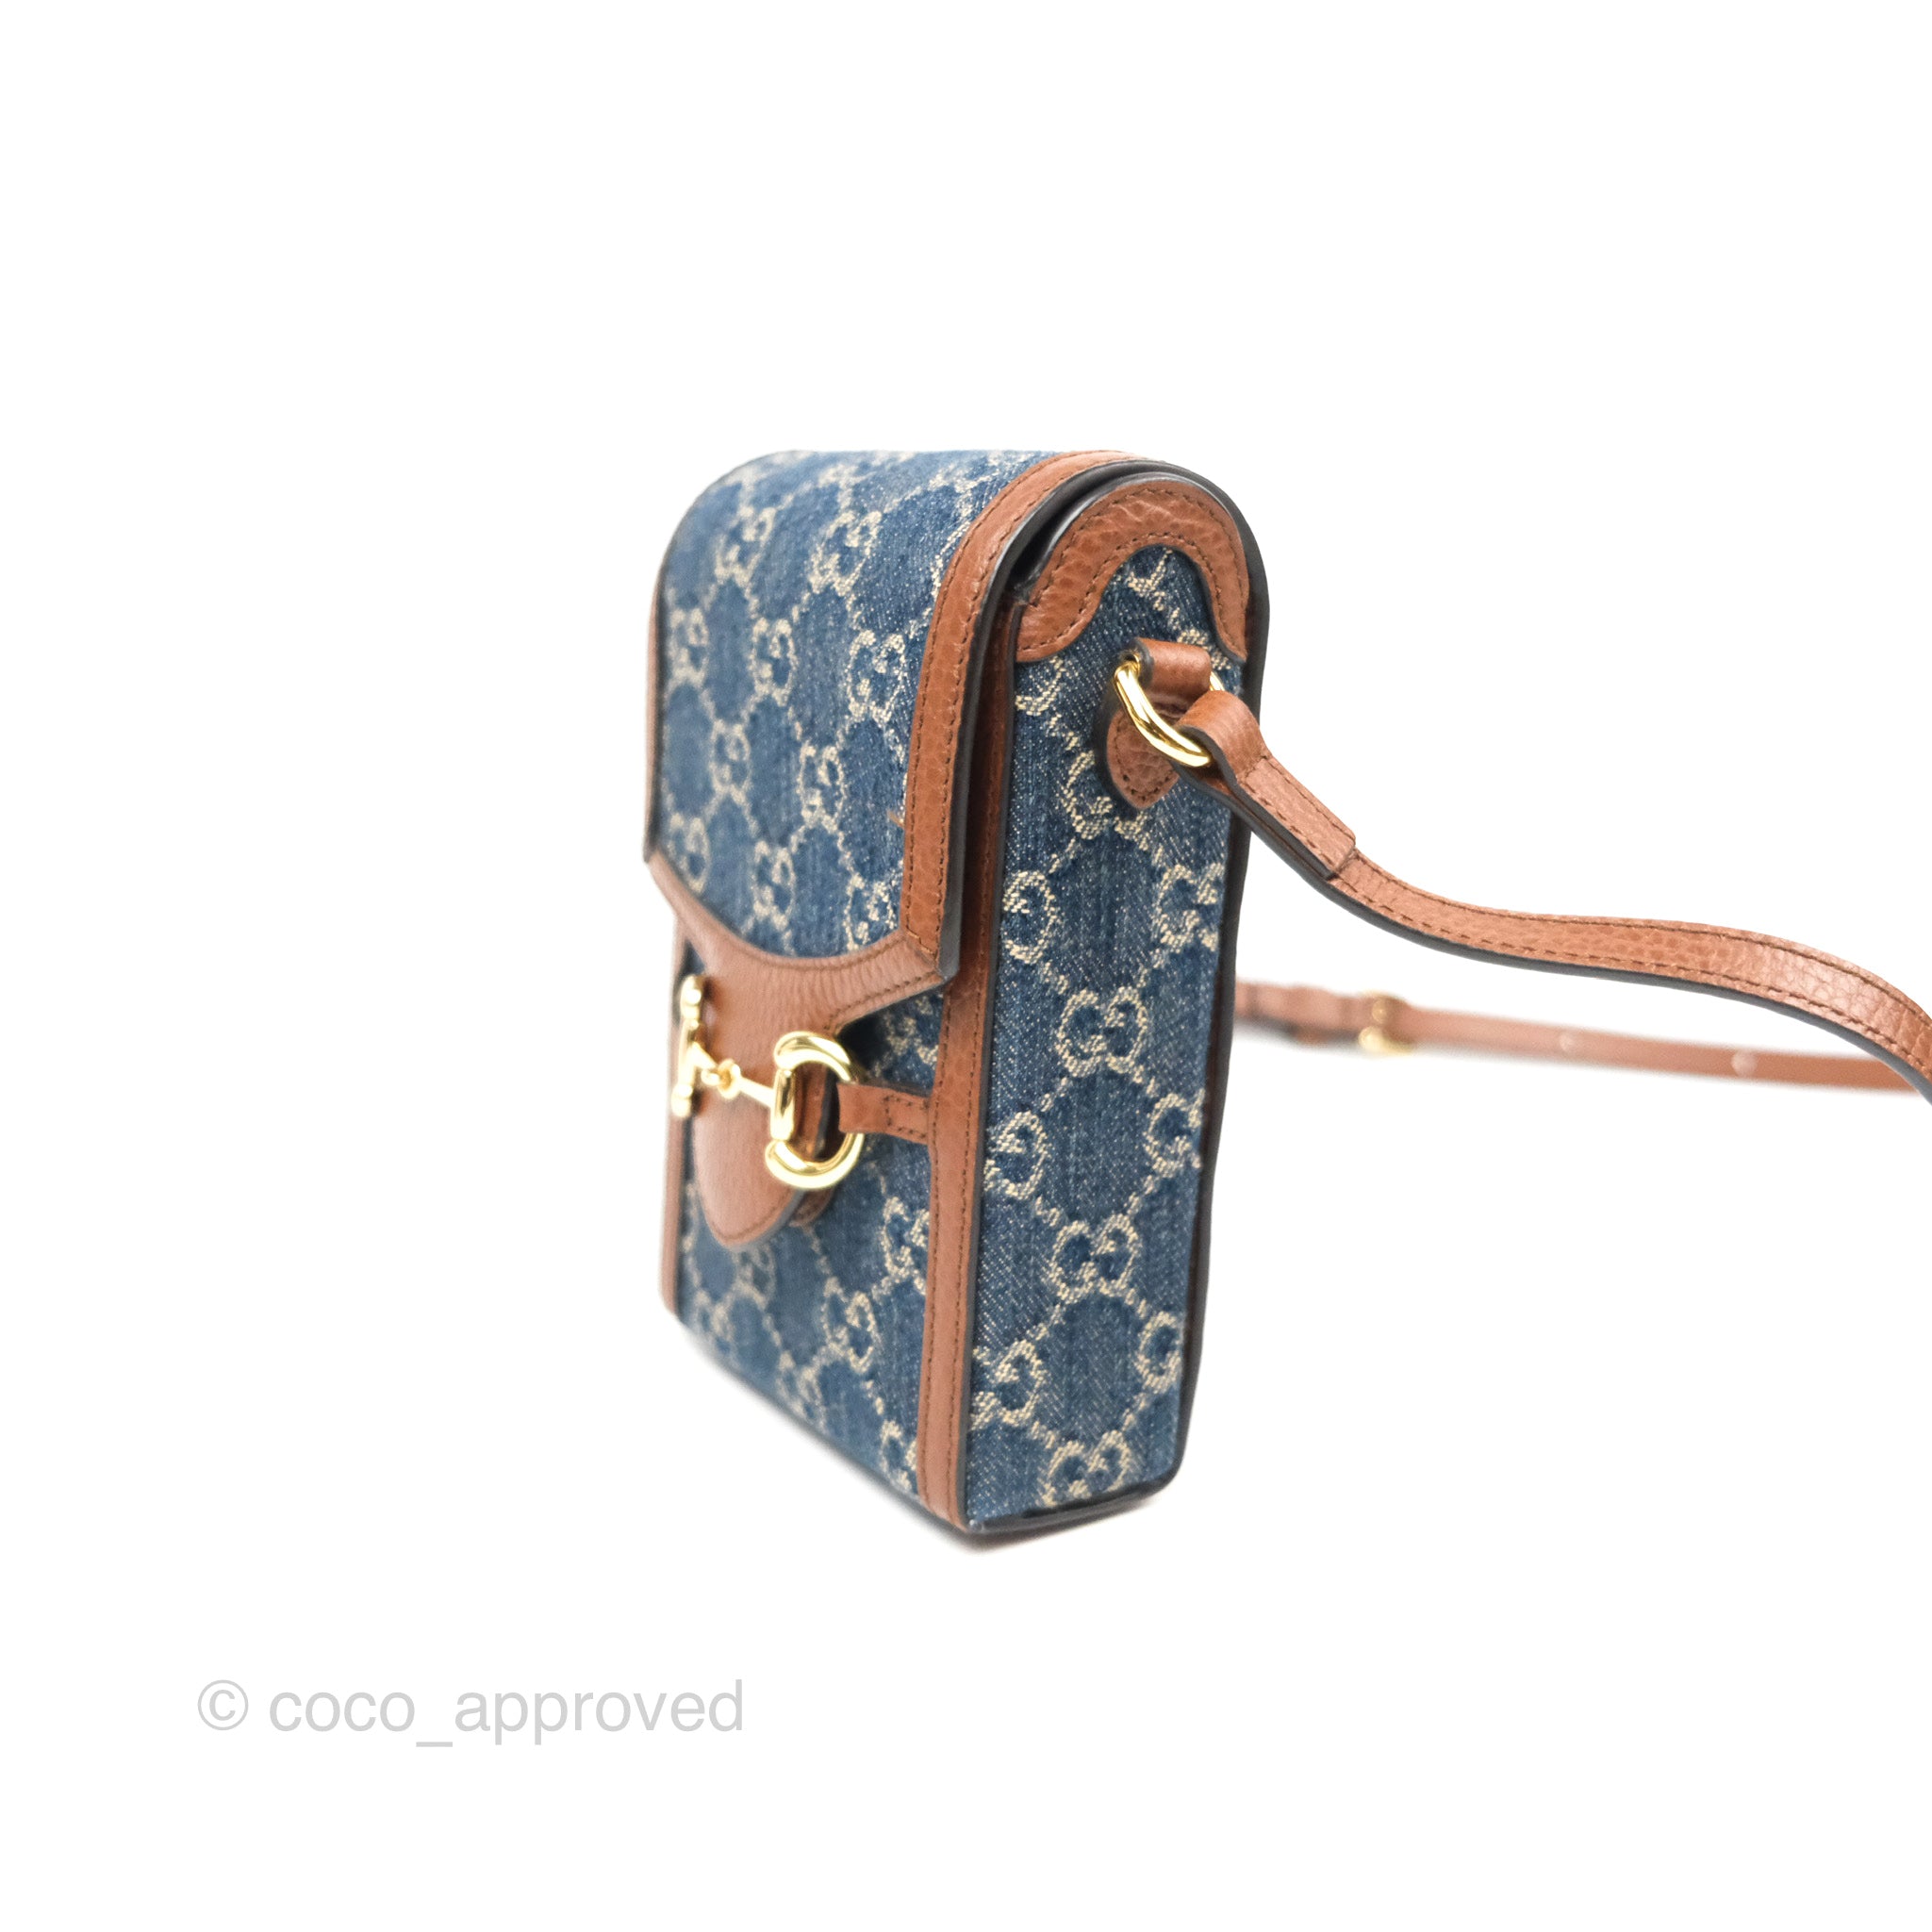 Gucci Horsebit 1955 Mini Bag - Brown